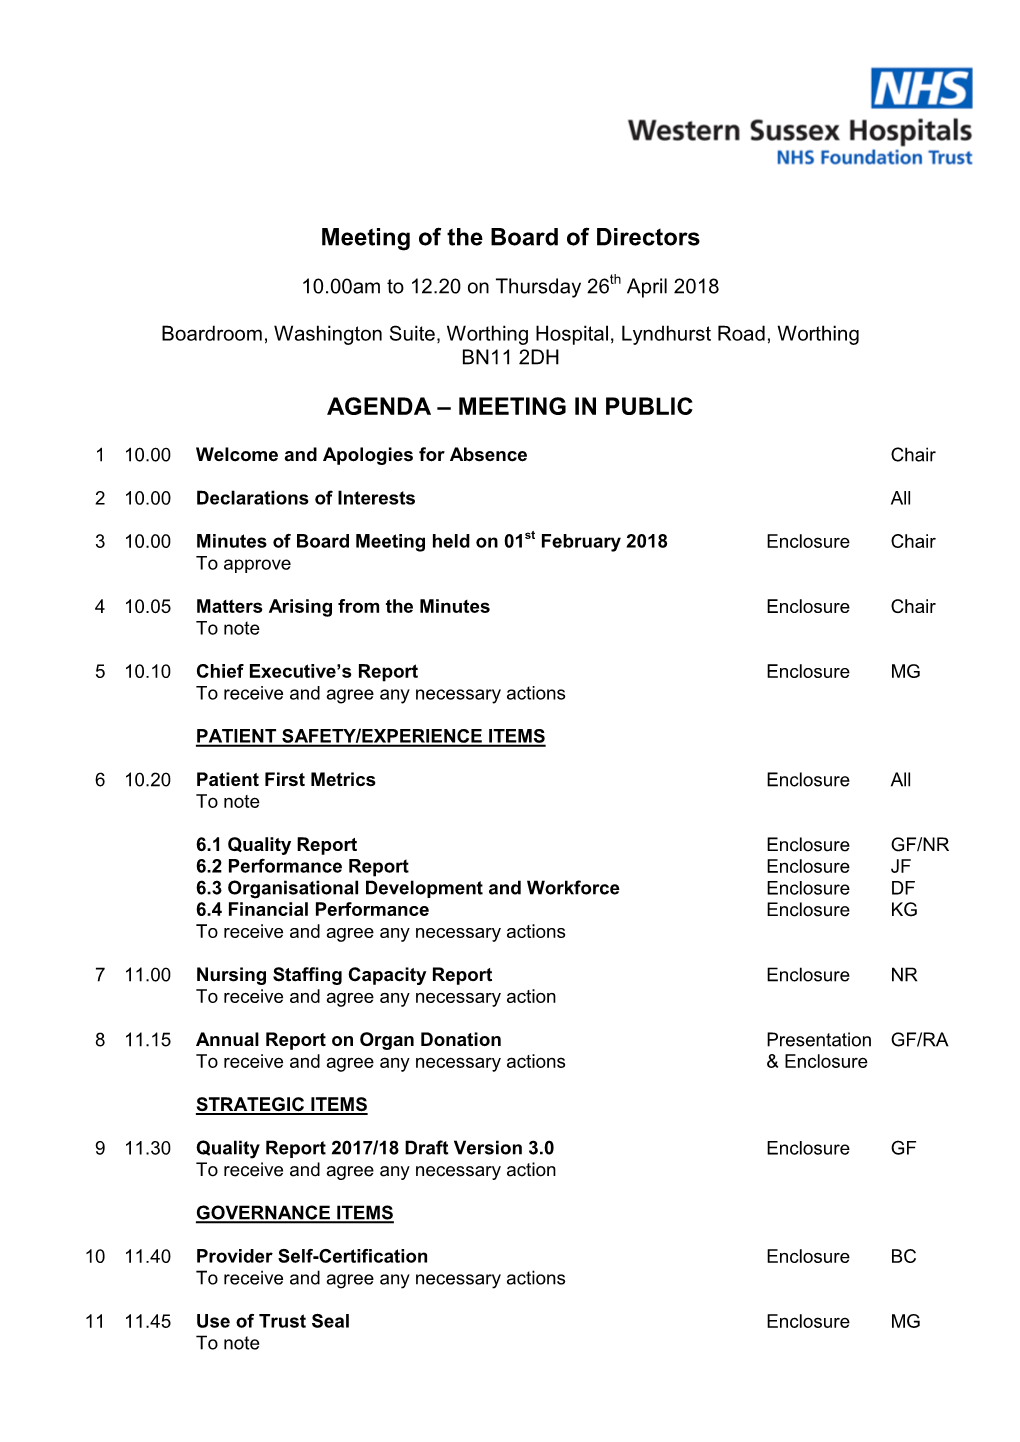 Meeting of the Board of Directors AGENDA